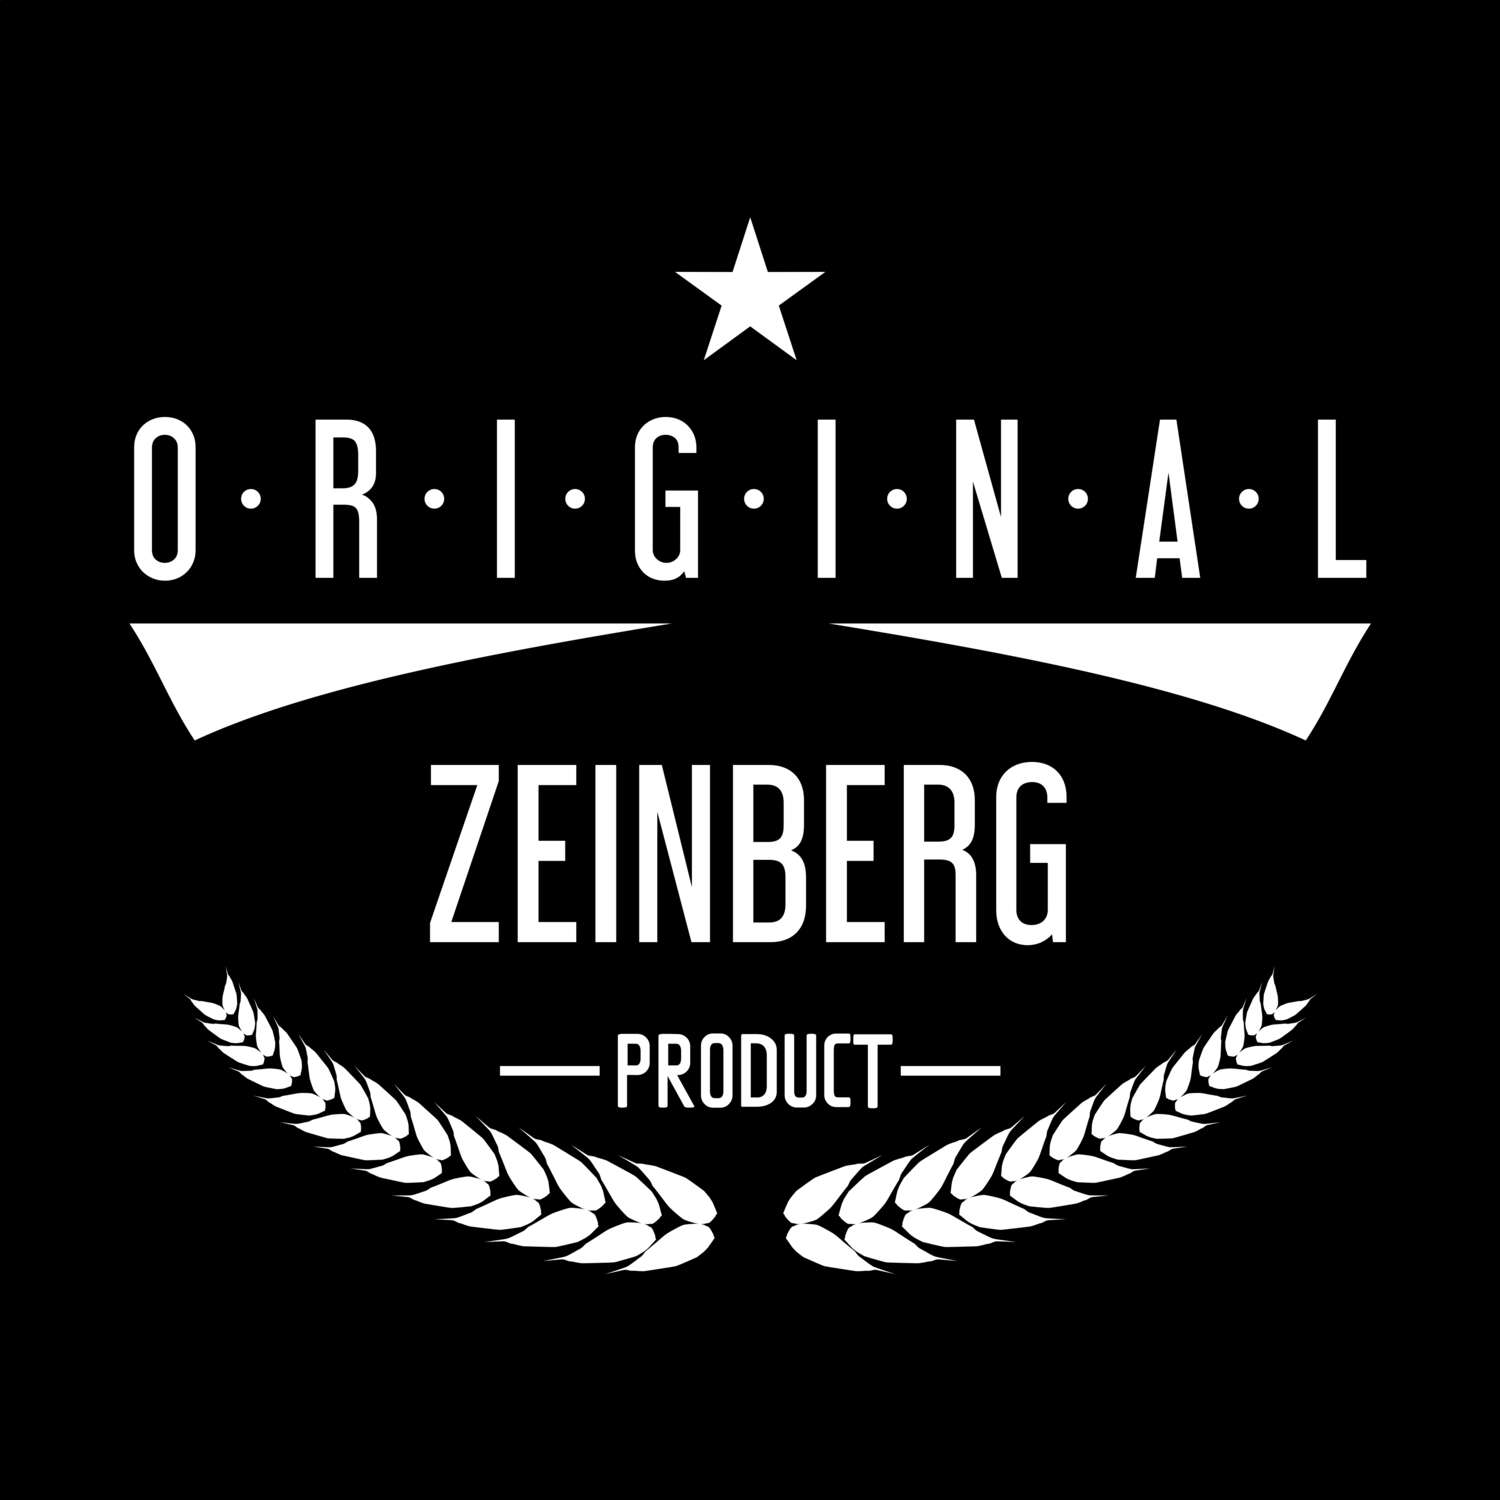 Zeinberg T-Shirt »Original Product«